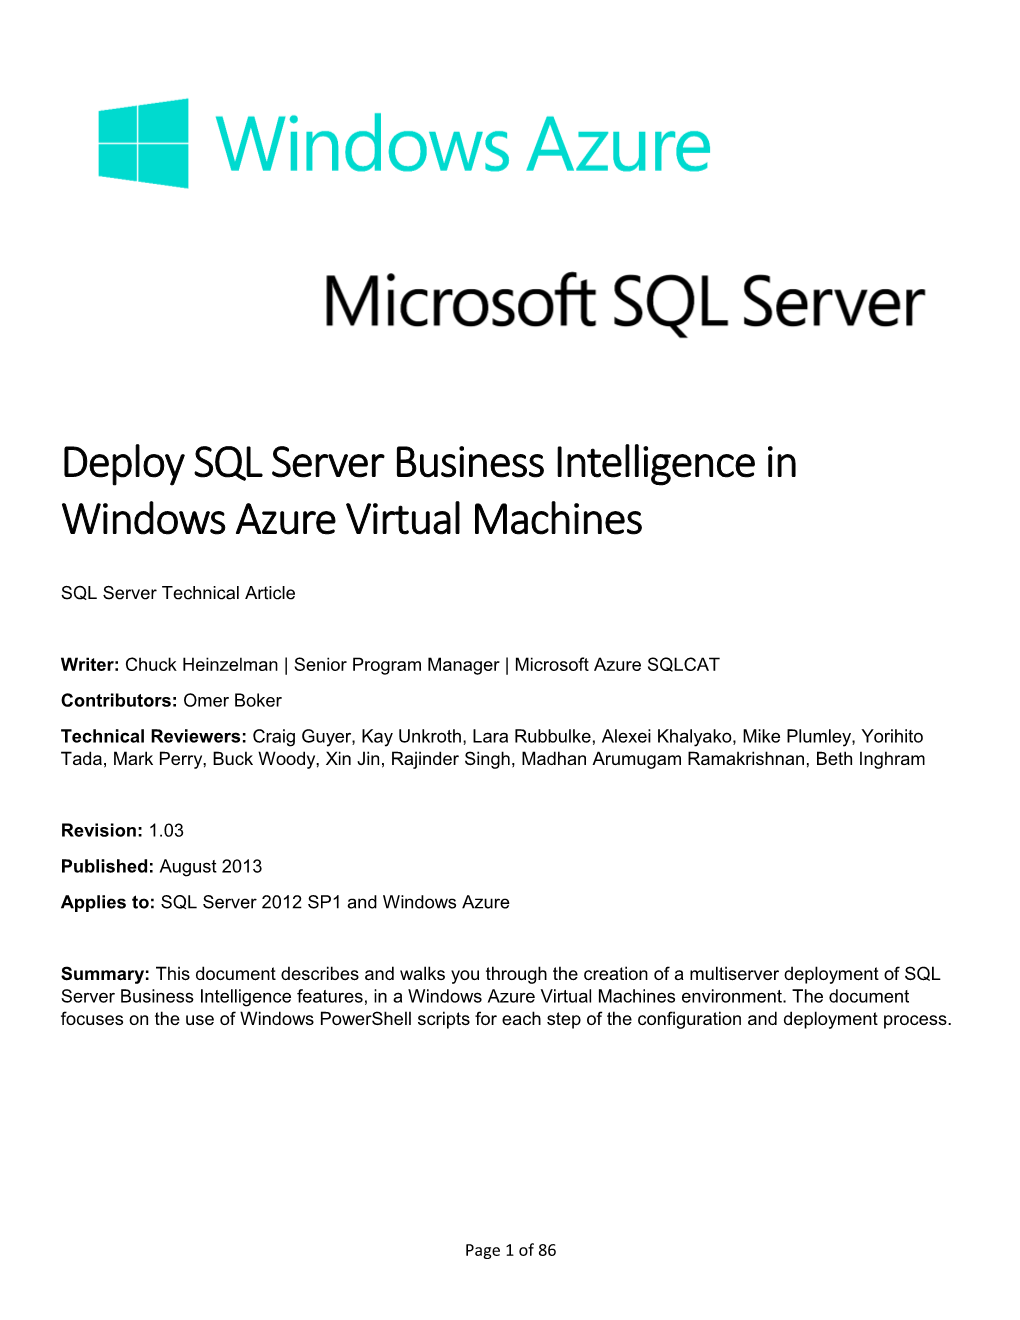 Deploy SQL Server Business Intelligence in Windows Azure Virtual Machines